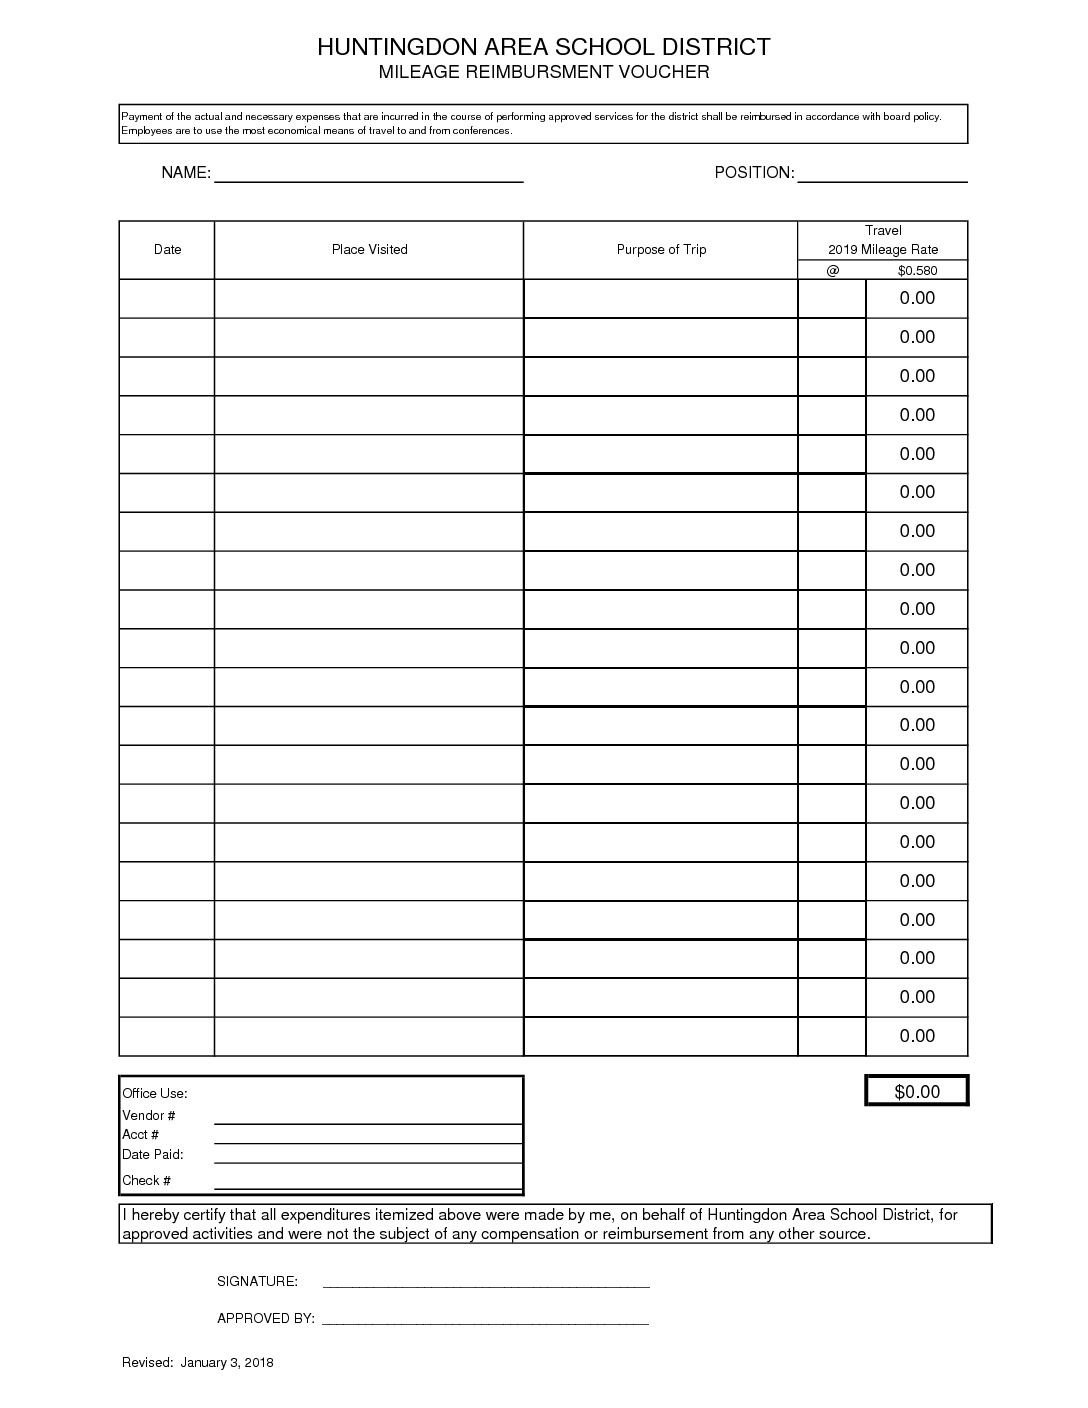 Expense Reimbursement Form Mileage Only 2019 – Huntingdon Area School District1088 x 1408